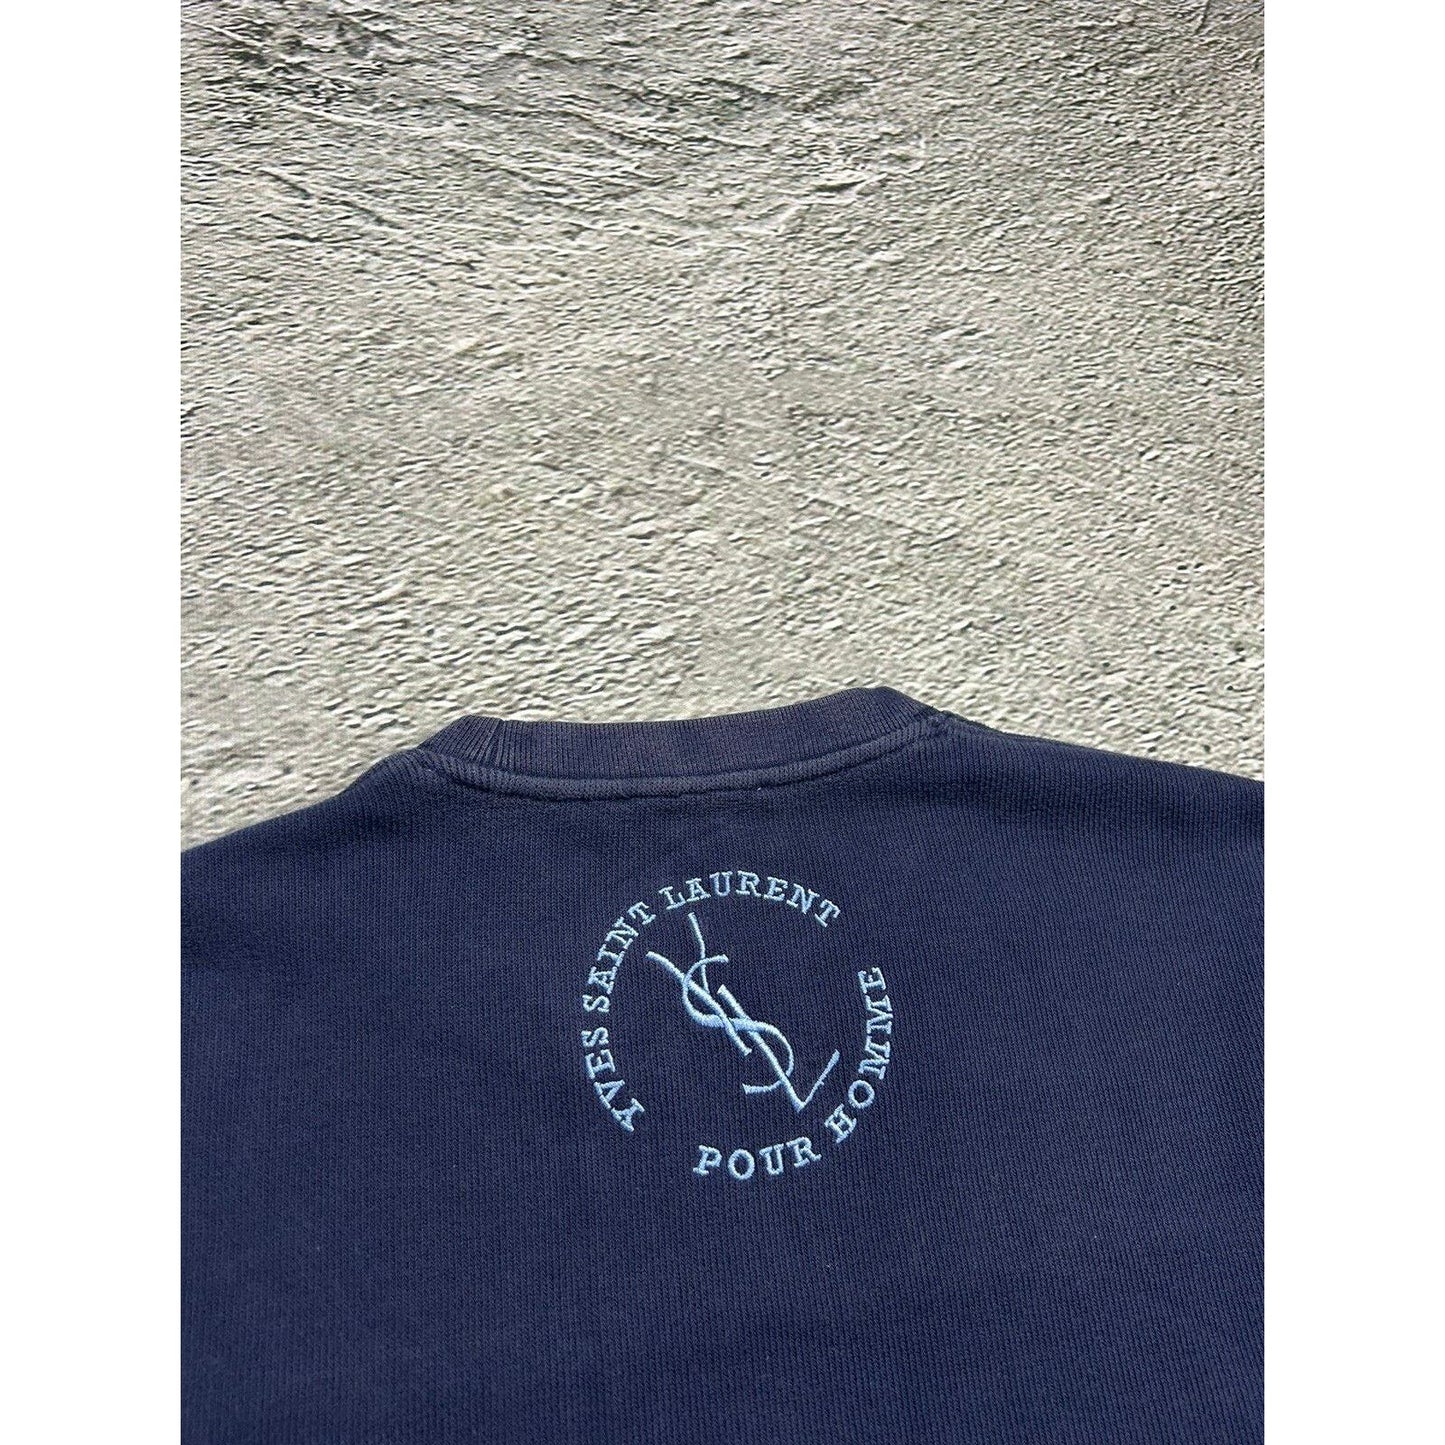 90s Yves Saint Laurent vintage sweatshirt big YSL logo